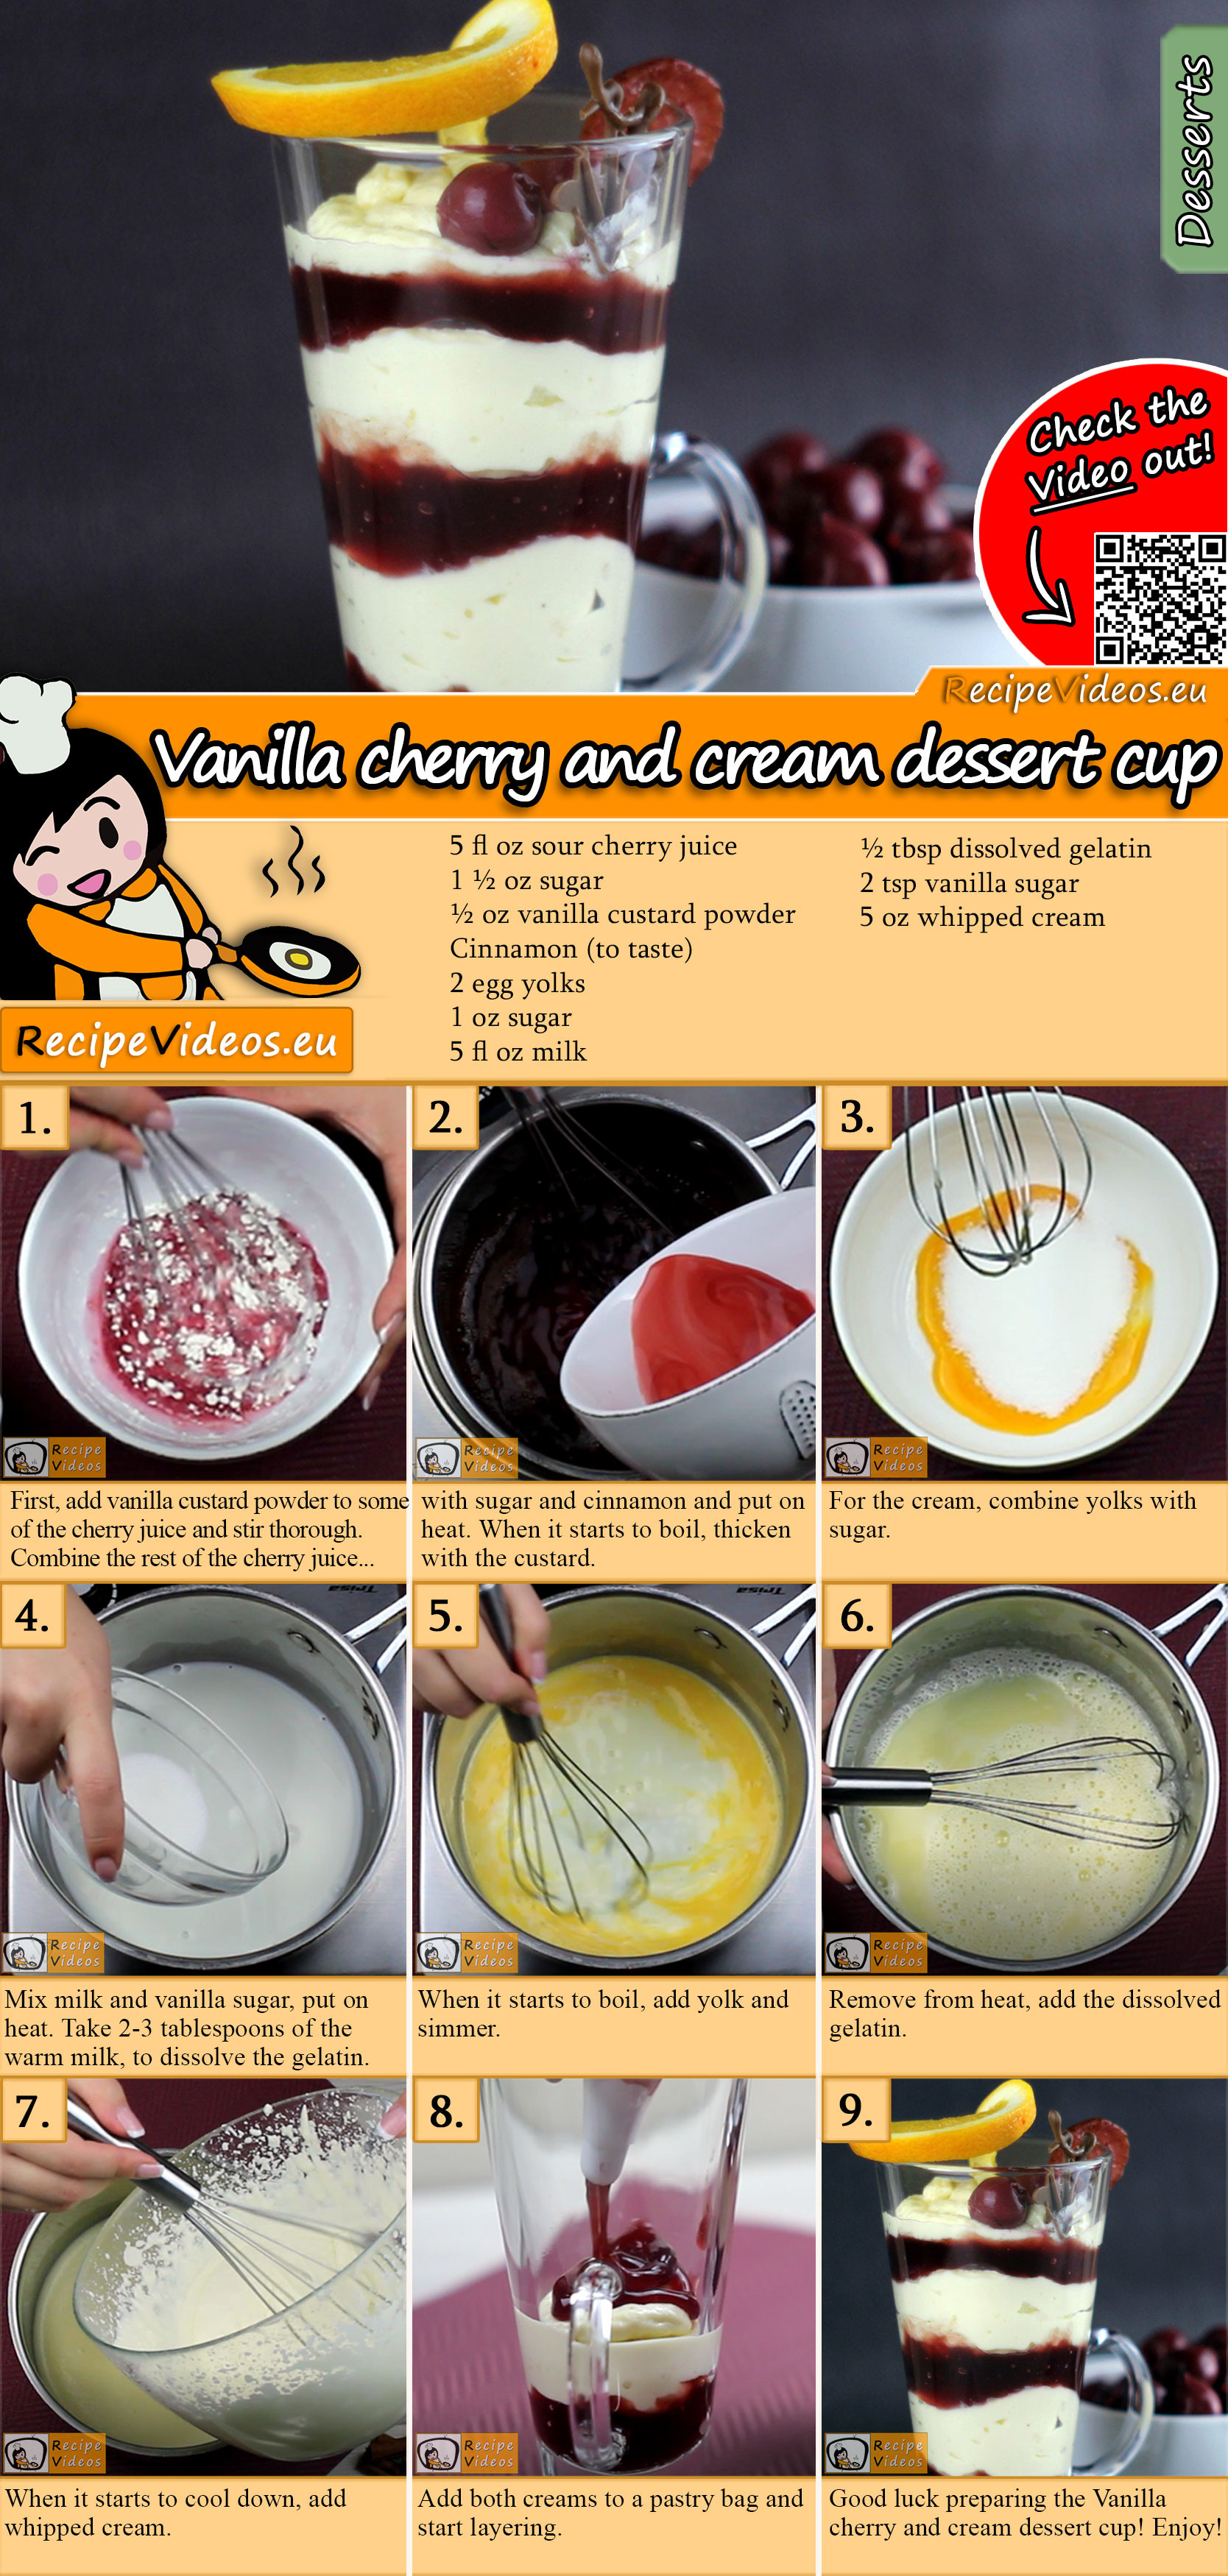 Vanilla cherry and cream dessert cup recipe with video